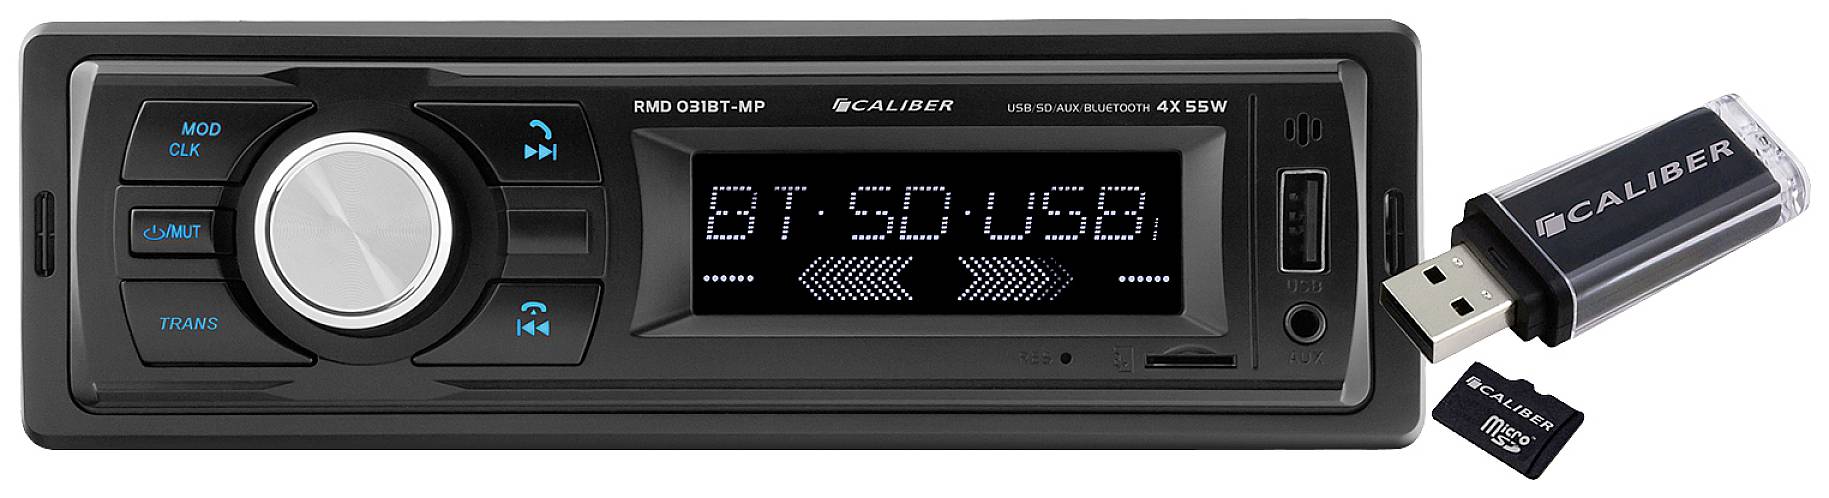 premie Intact een Caliber RMD031BT-MP Car stereo Bluetooth handsfree set | Conrad.com